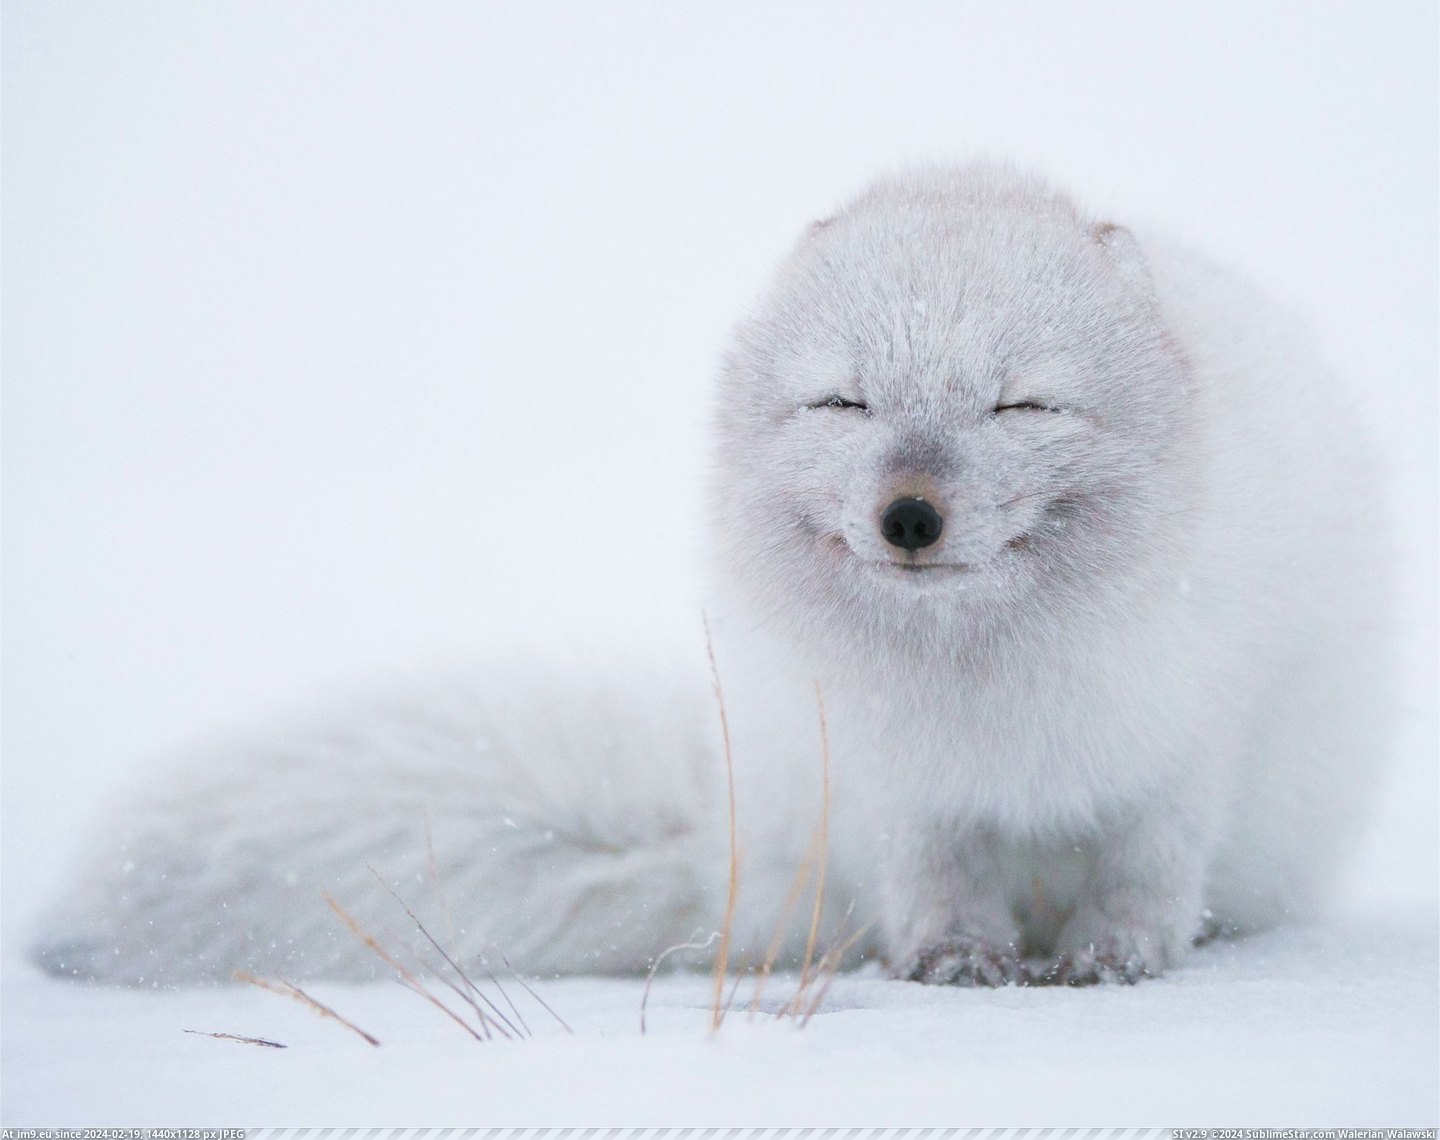 #White  #Fox [Aww] Little white fox Pic. (Bild von album My r/AWW favs))